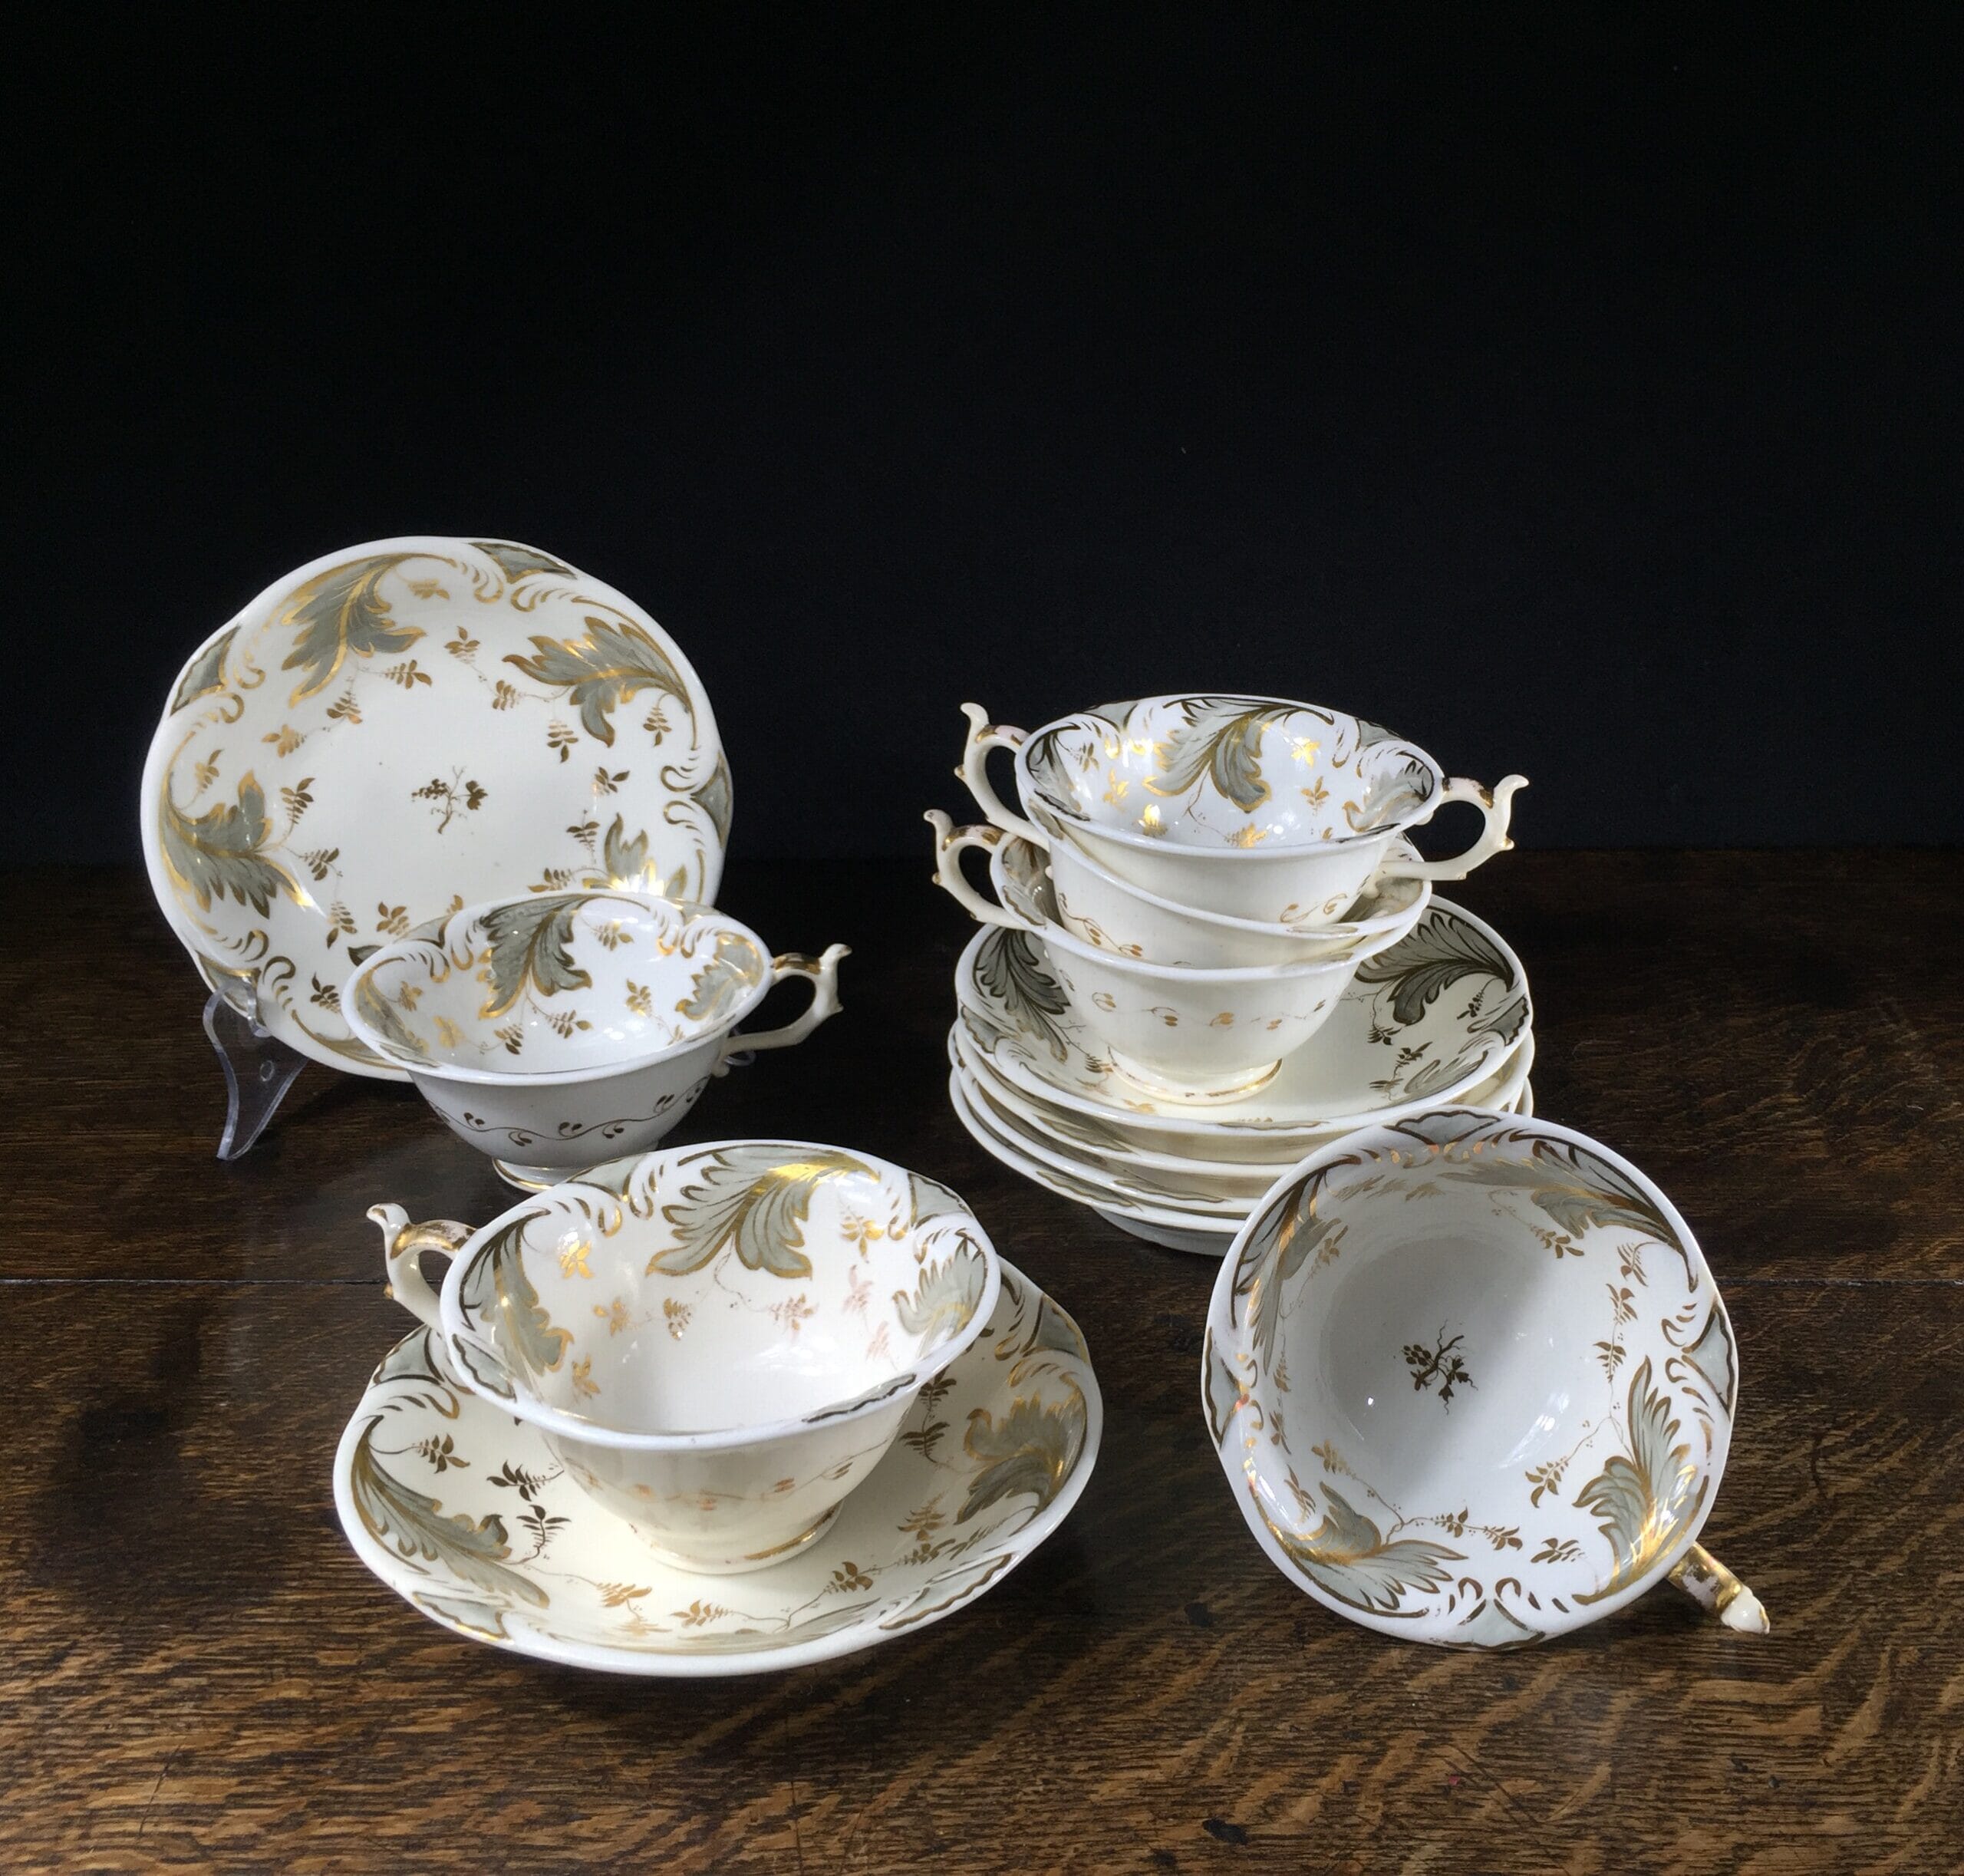 Rockingham tea setting for 6, grey foliage pattern #1168, c.1830-0